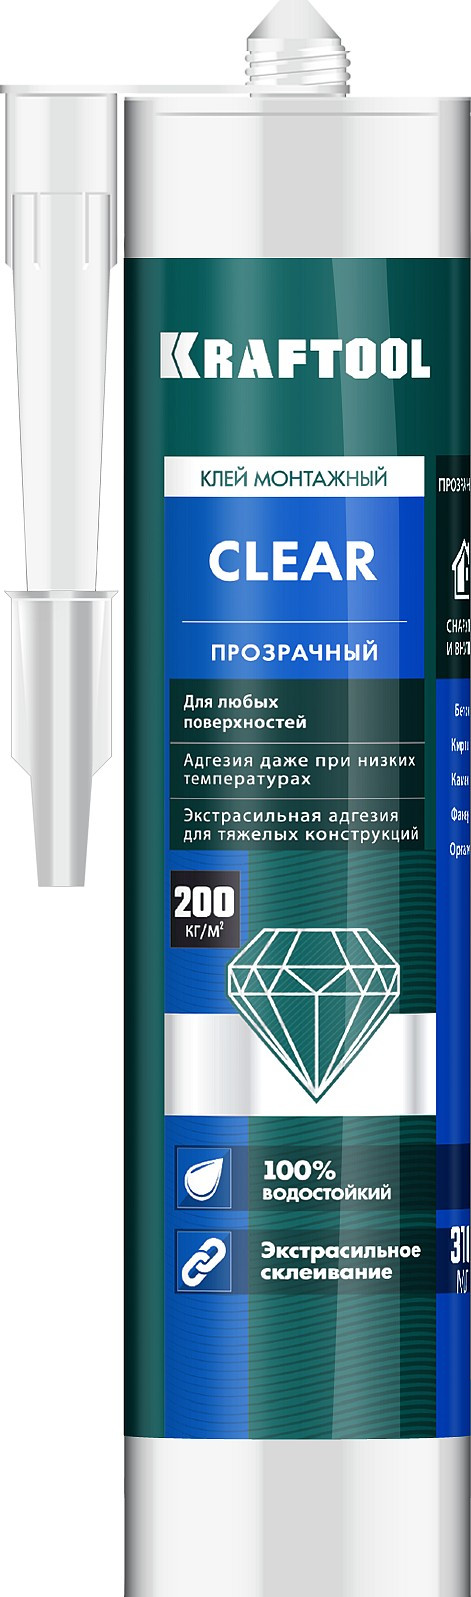 KRAFTOOL CLEAR, 310мл, прозрачный, суперсильный монтажный клей (41342)